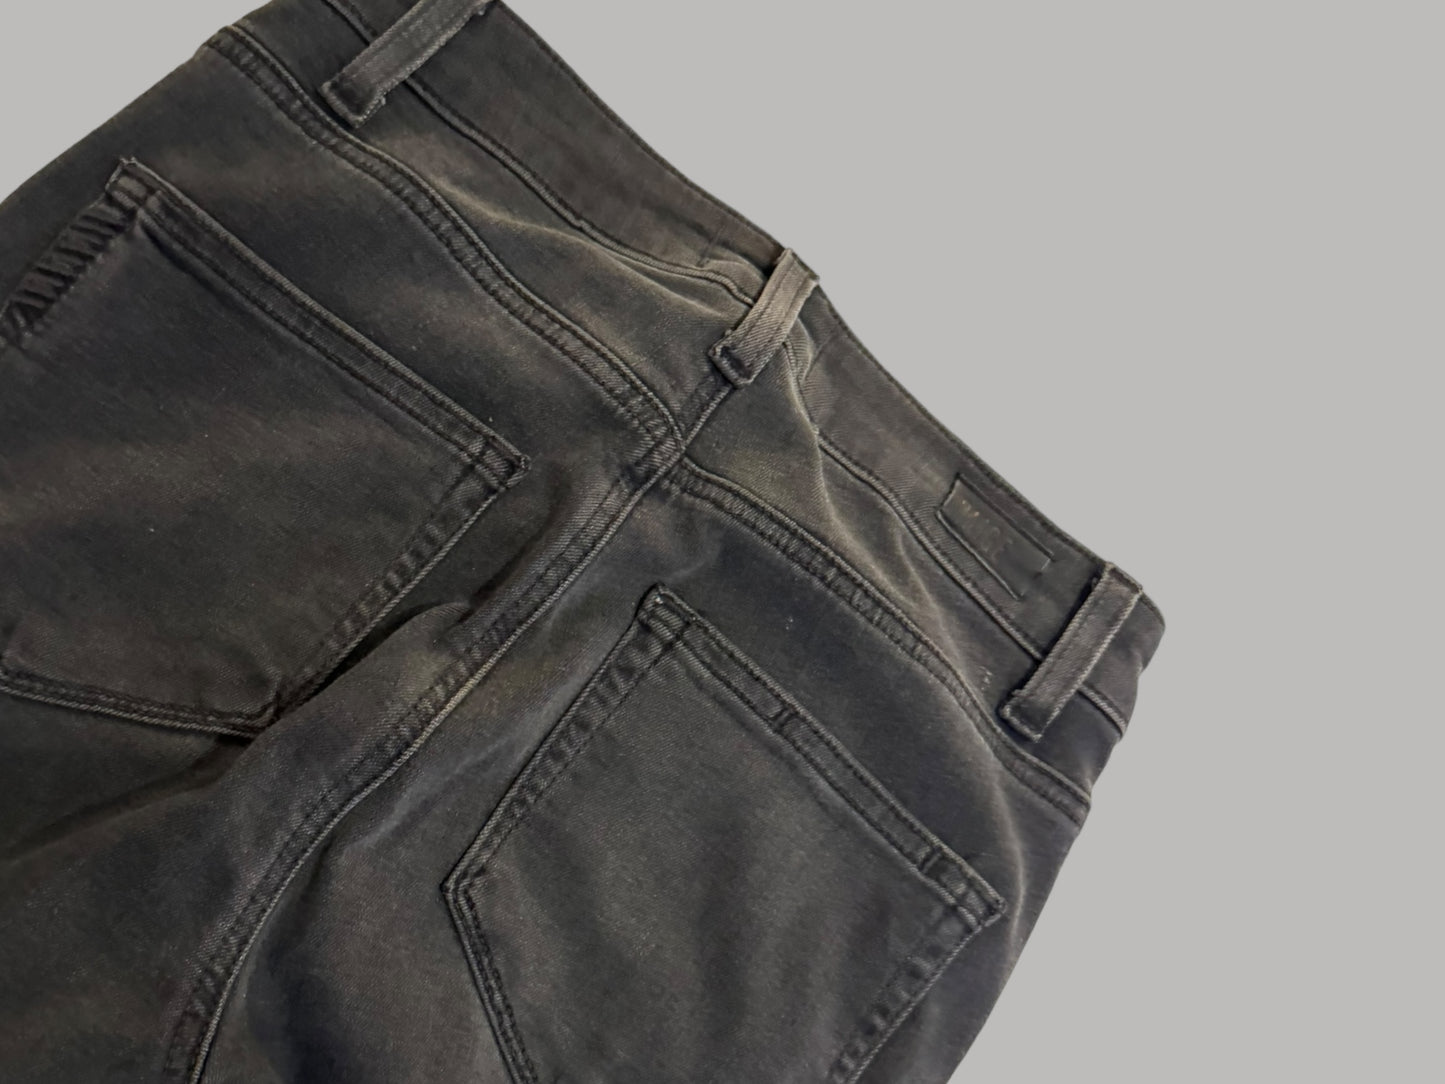 PAIGE ‘hoxton ultra skinny’ grey jeans size 24